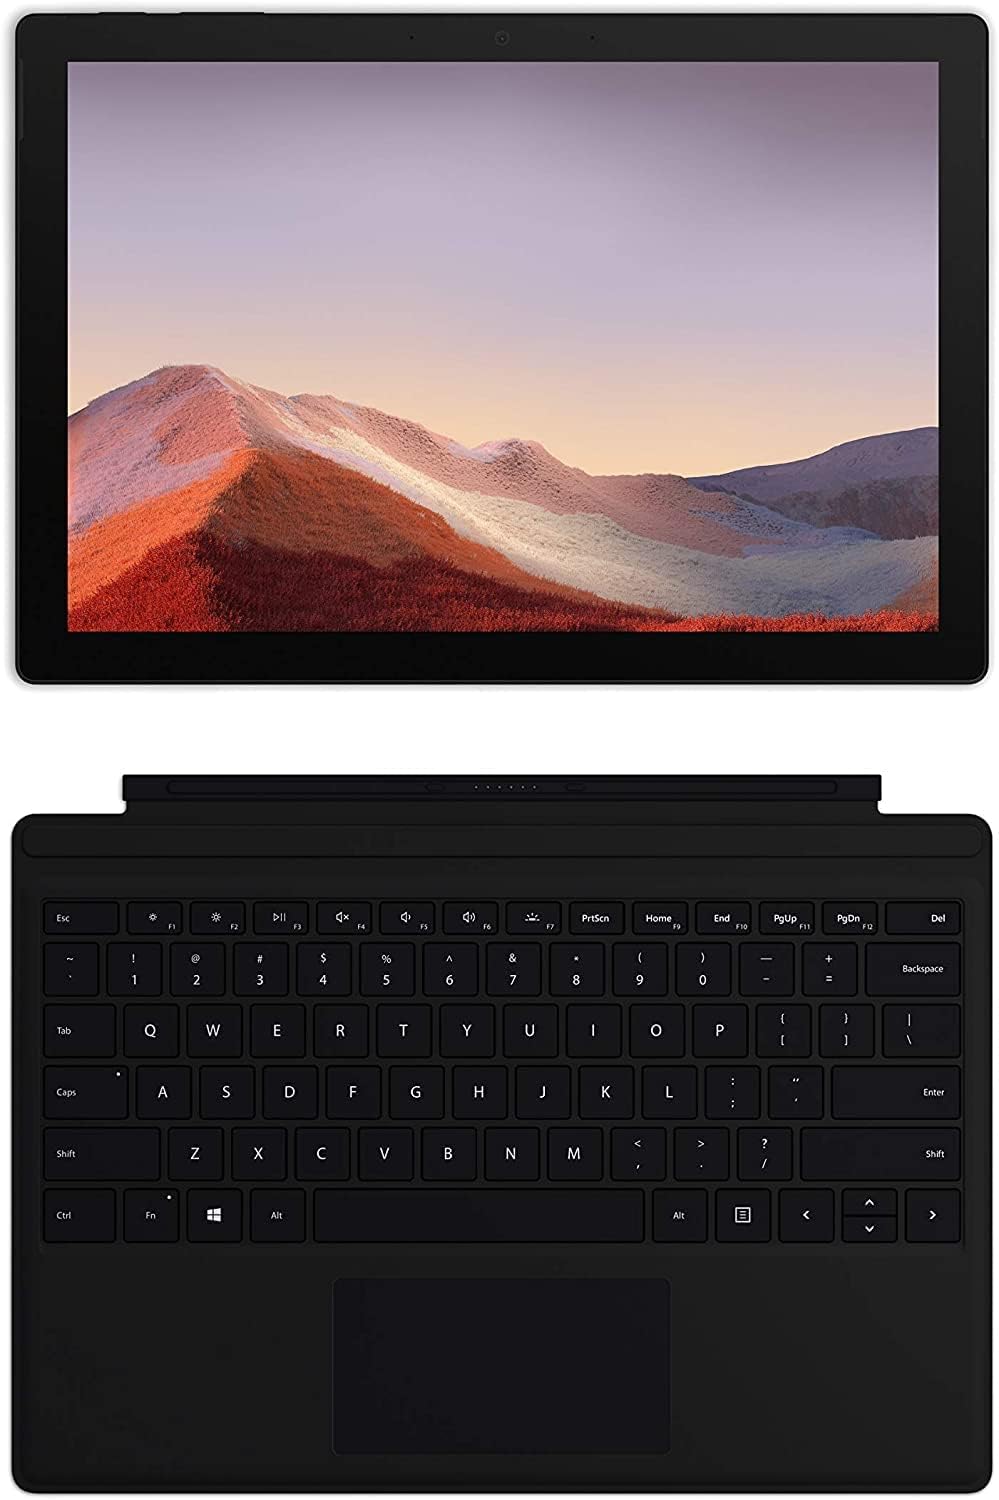 Microsoft Surface Pro 4 12.3 Touchscreen (2736 X 1824) Tablet PC, Intel Core i5-6300U, 8GB RAM, 256GB SSD, Backlit Keyboard, WiFi, Camera, Windows 10 Pro (Renewed)